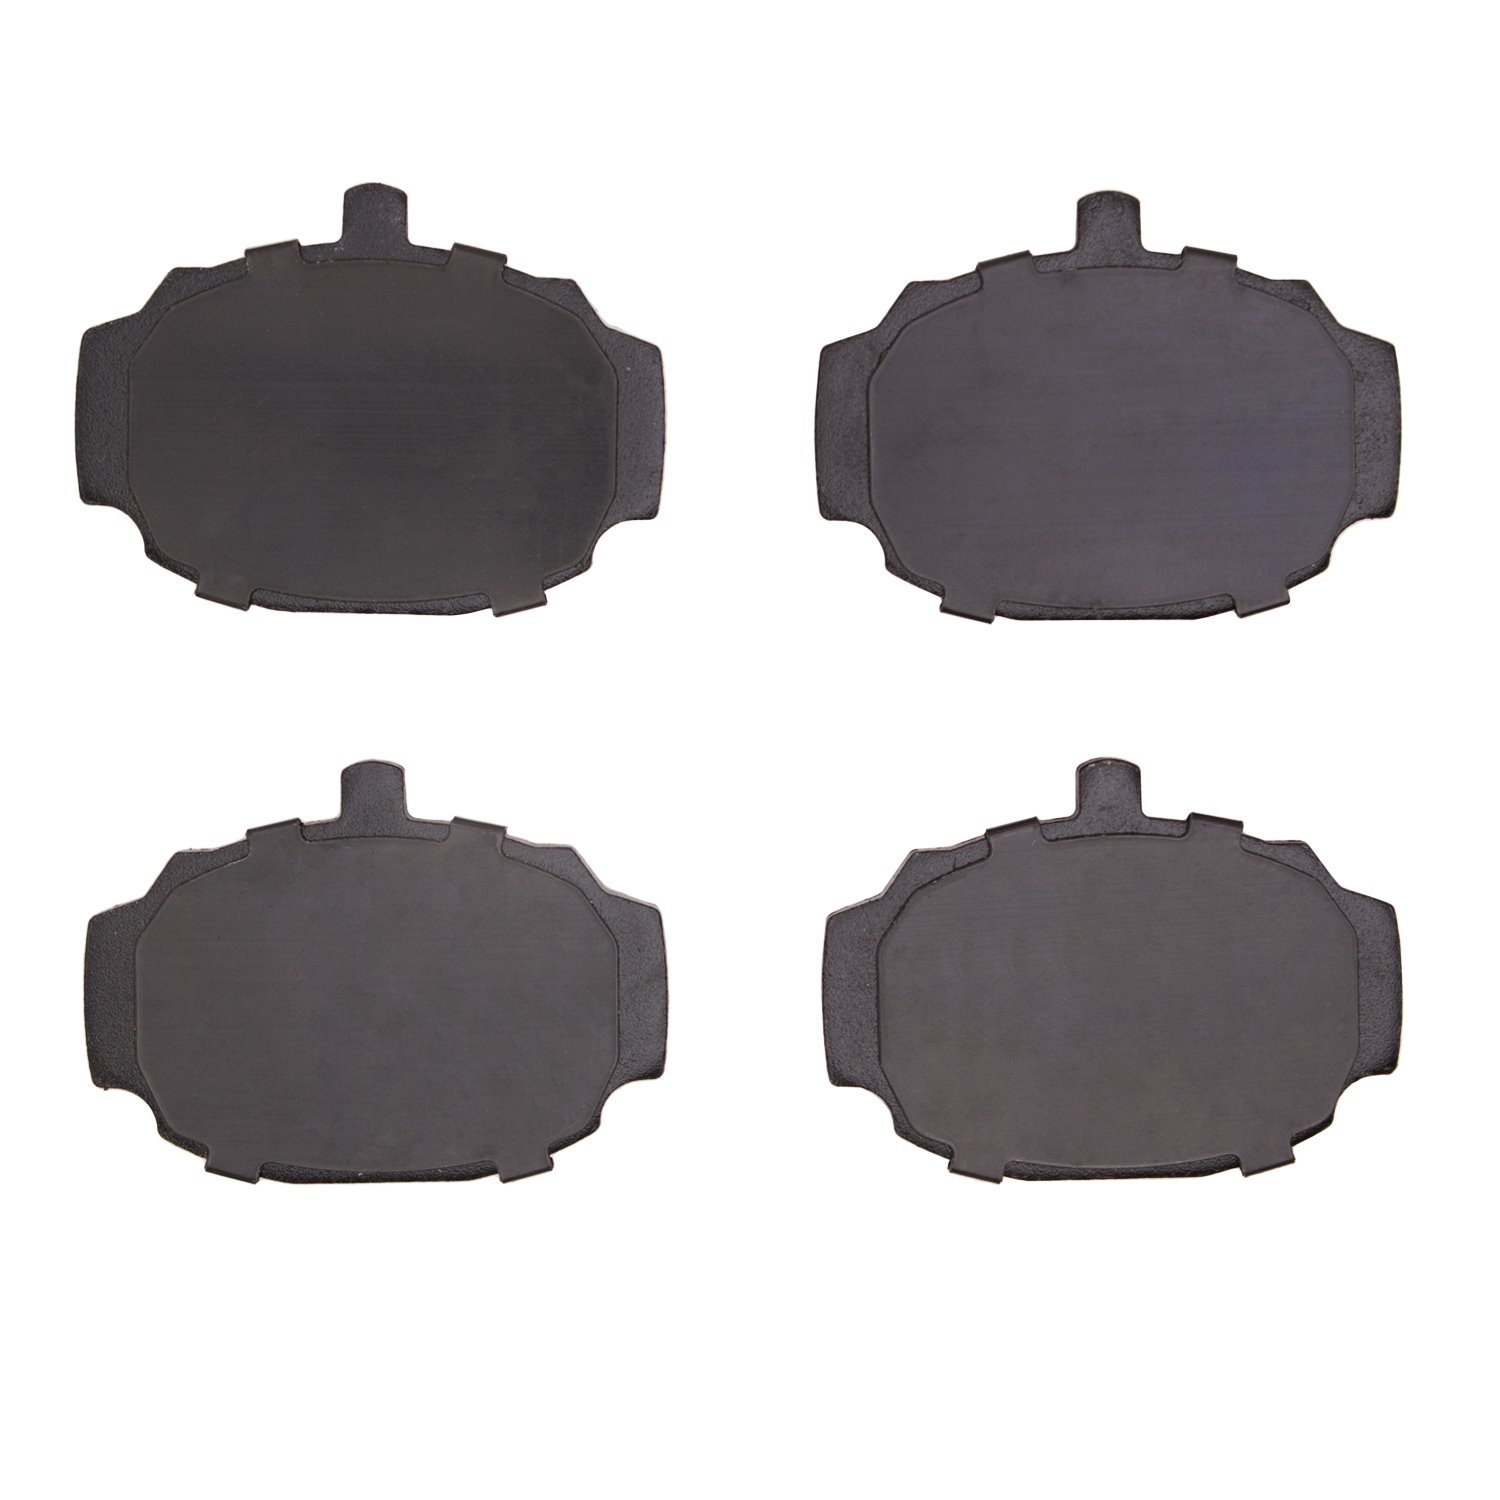 1310-0027-00 3000-Series Ceramic Brake Pads, 1962-1980 Multiple Makes/Models, Position: Front